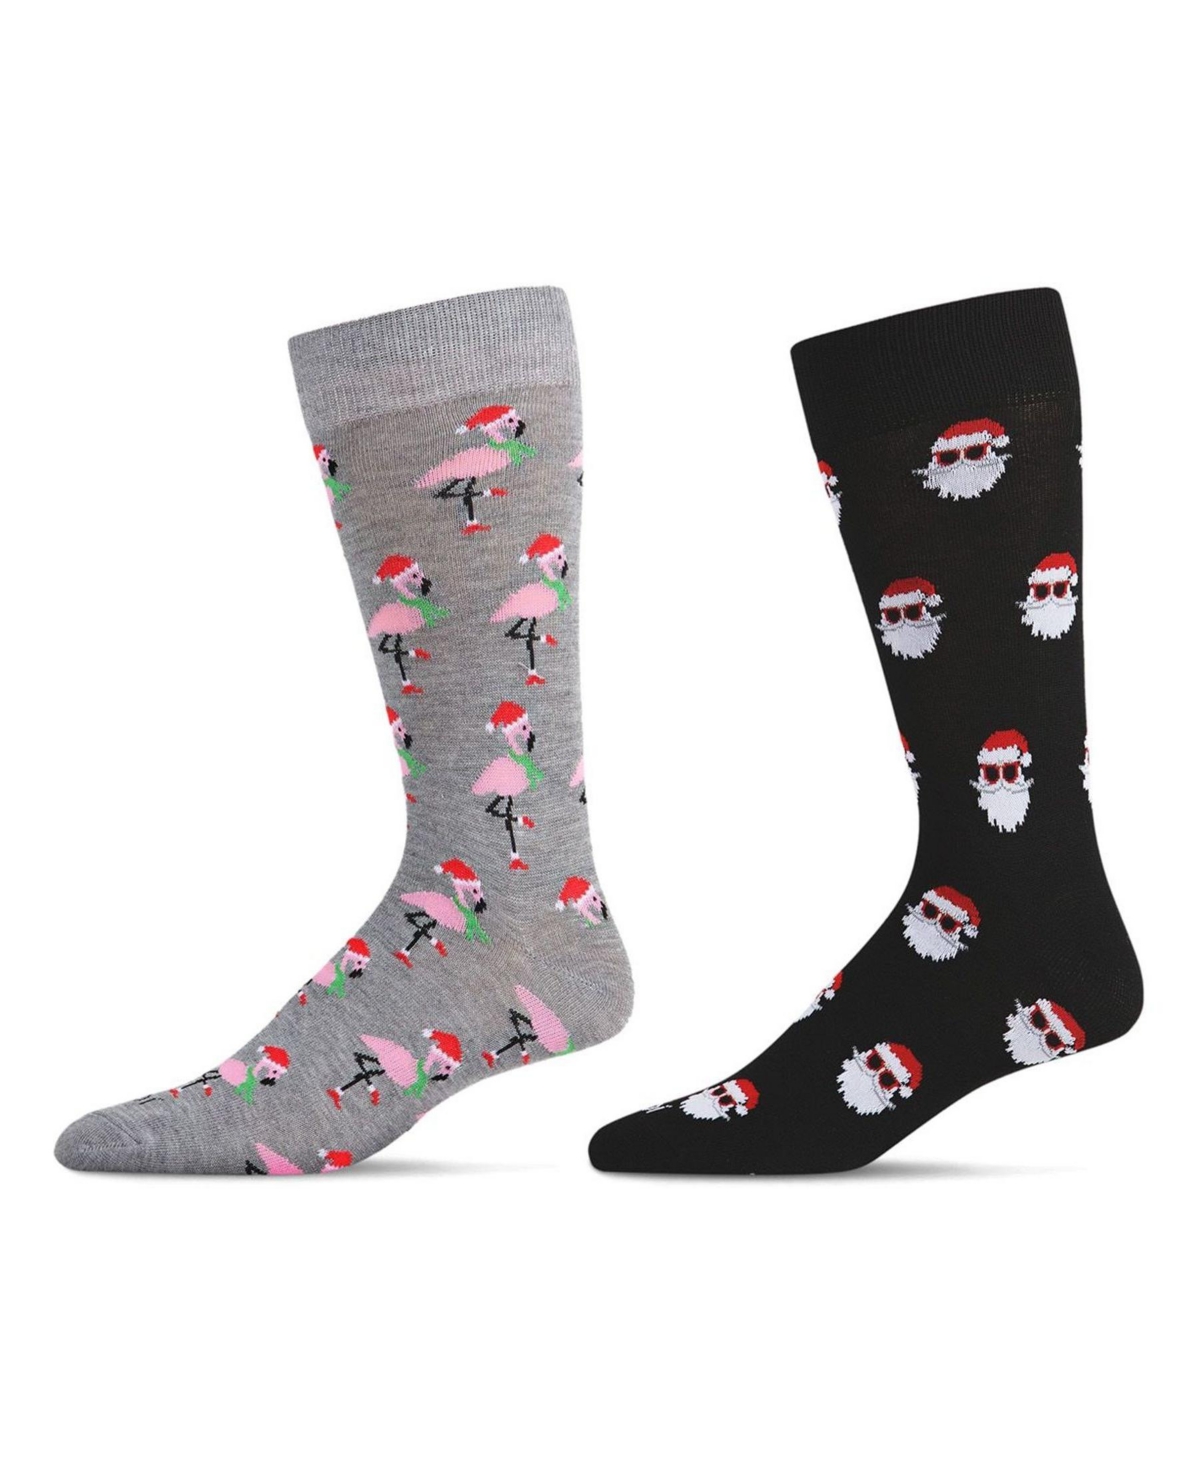 Men's Christmas Holiday Pair Novelty Socks, Pack of 2 - Green